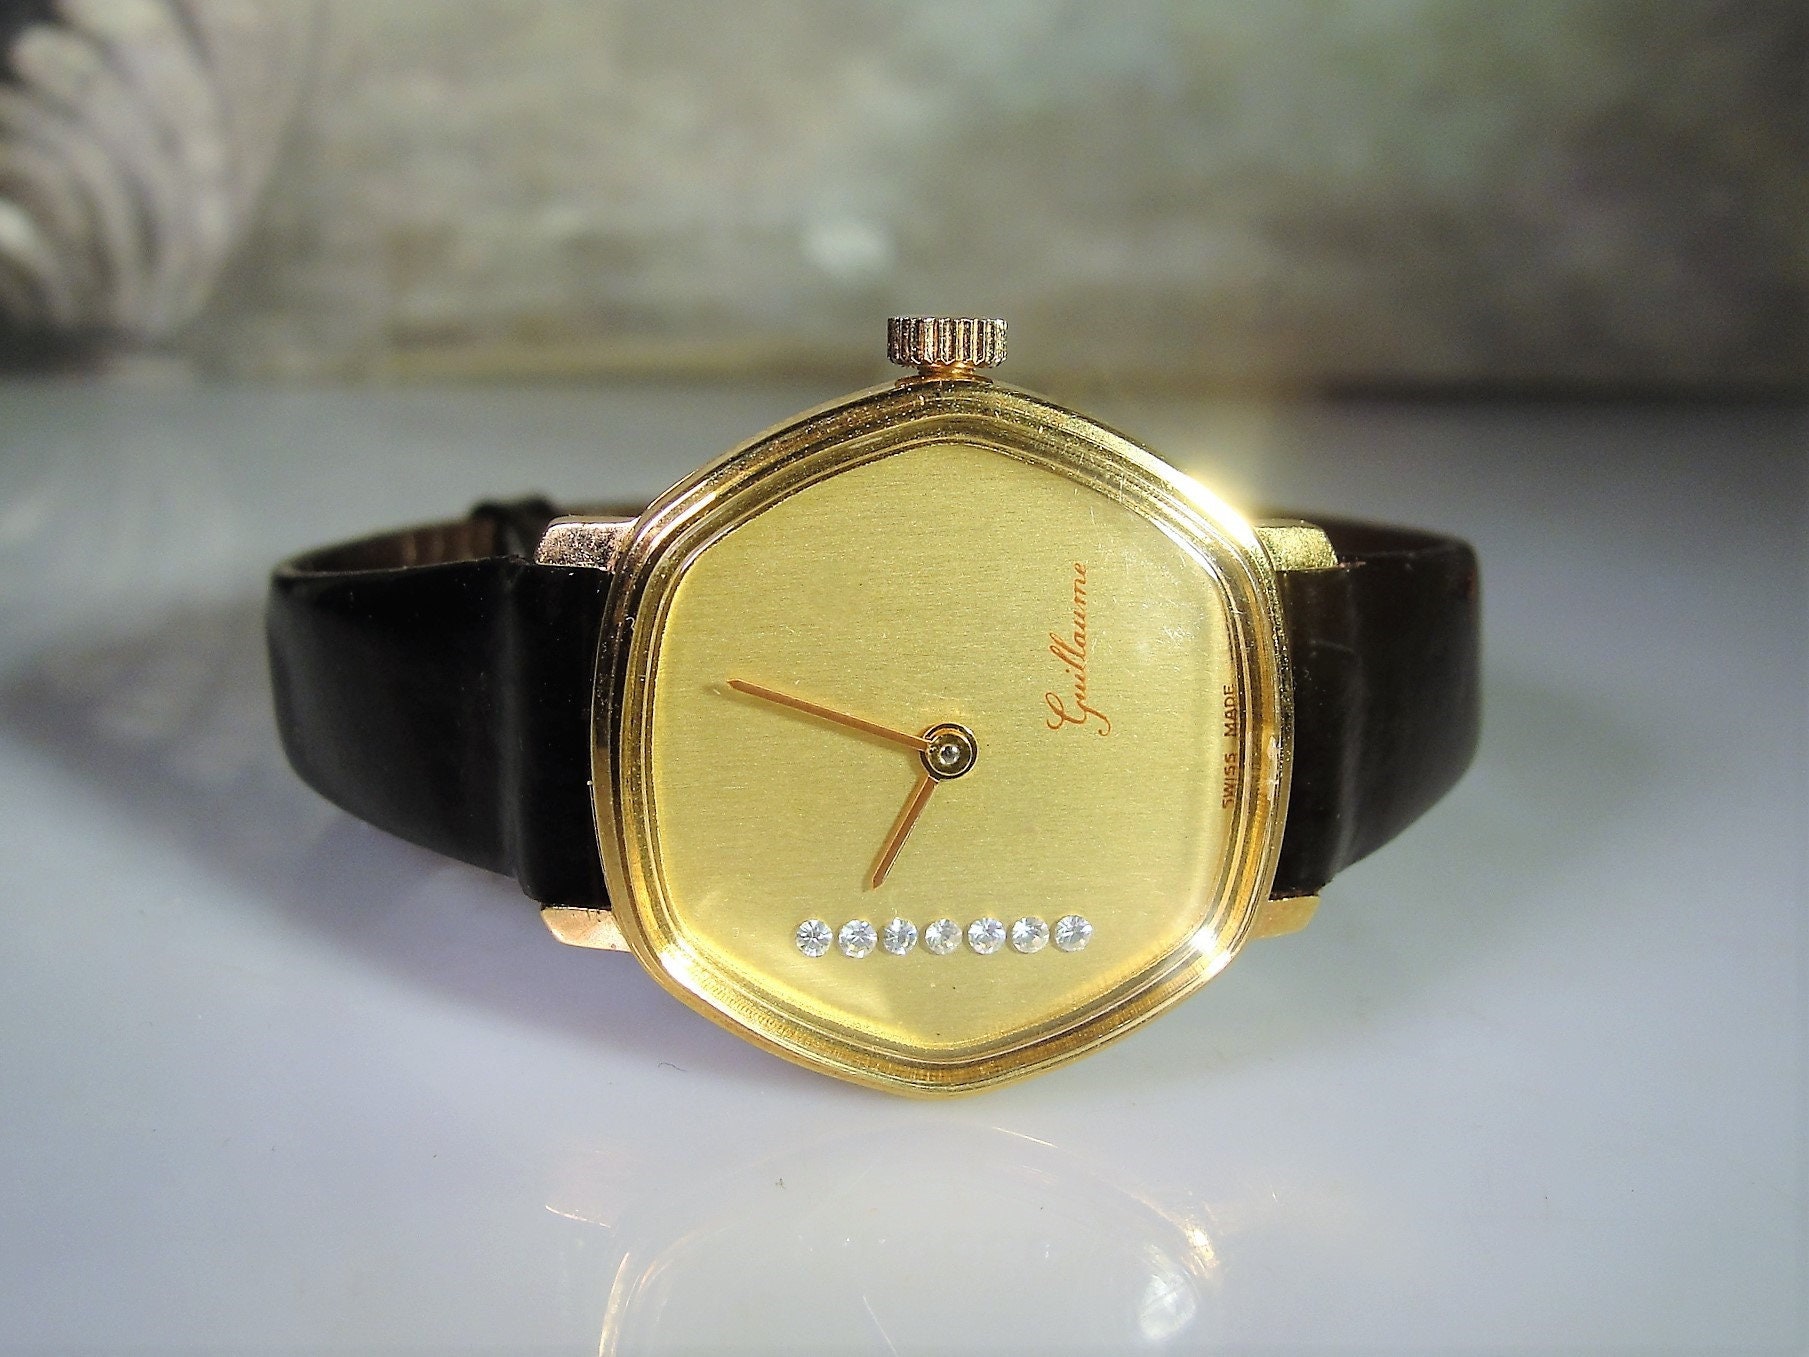 GUILLAUME Elegant French Wrist Watch, Mechanical Women’s Wrist Watch ...